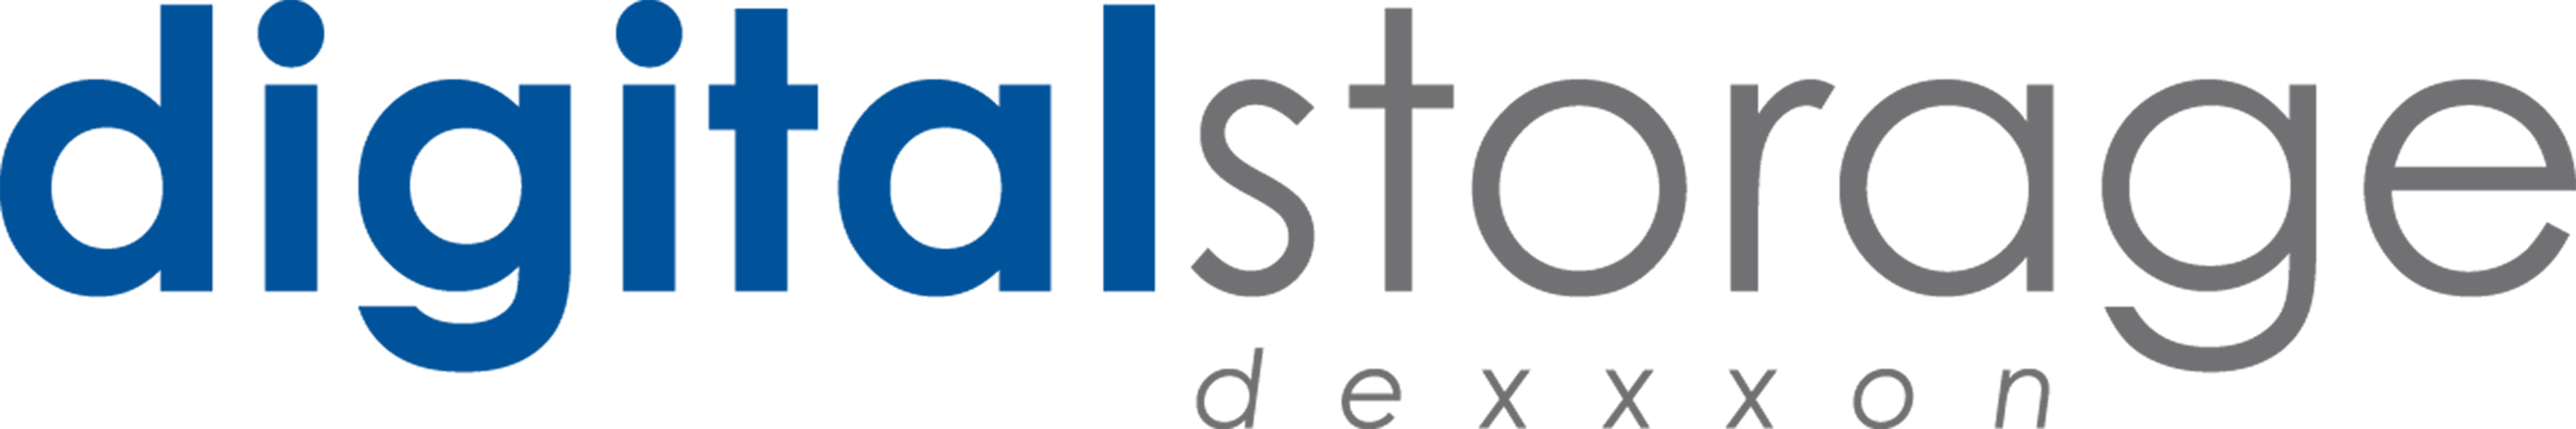 Dexxxon Digital Storage 